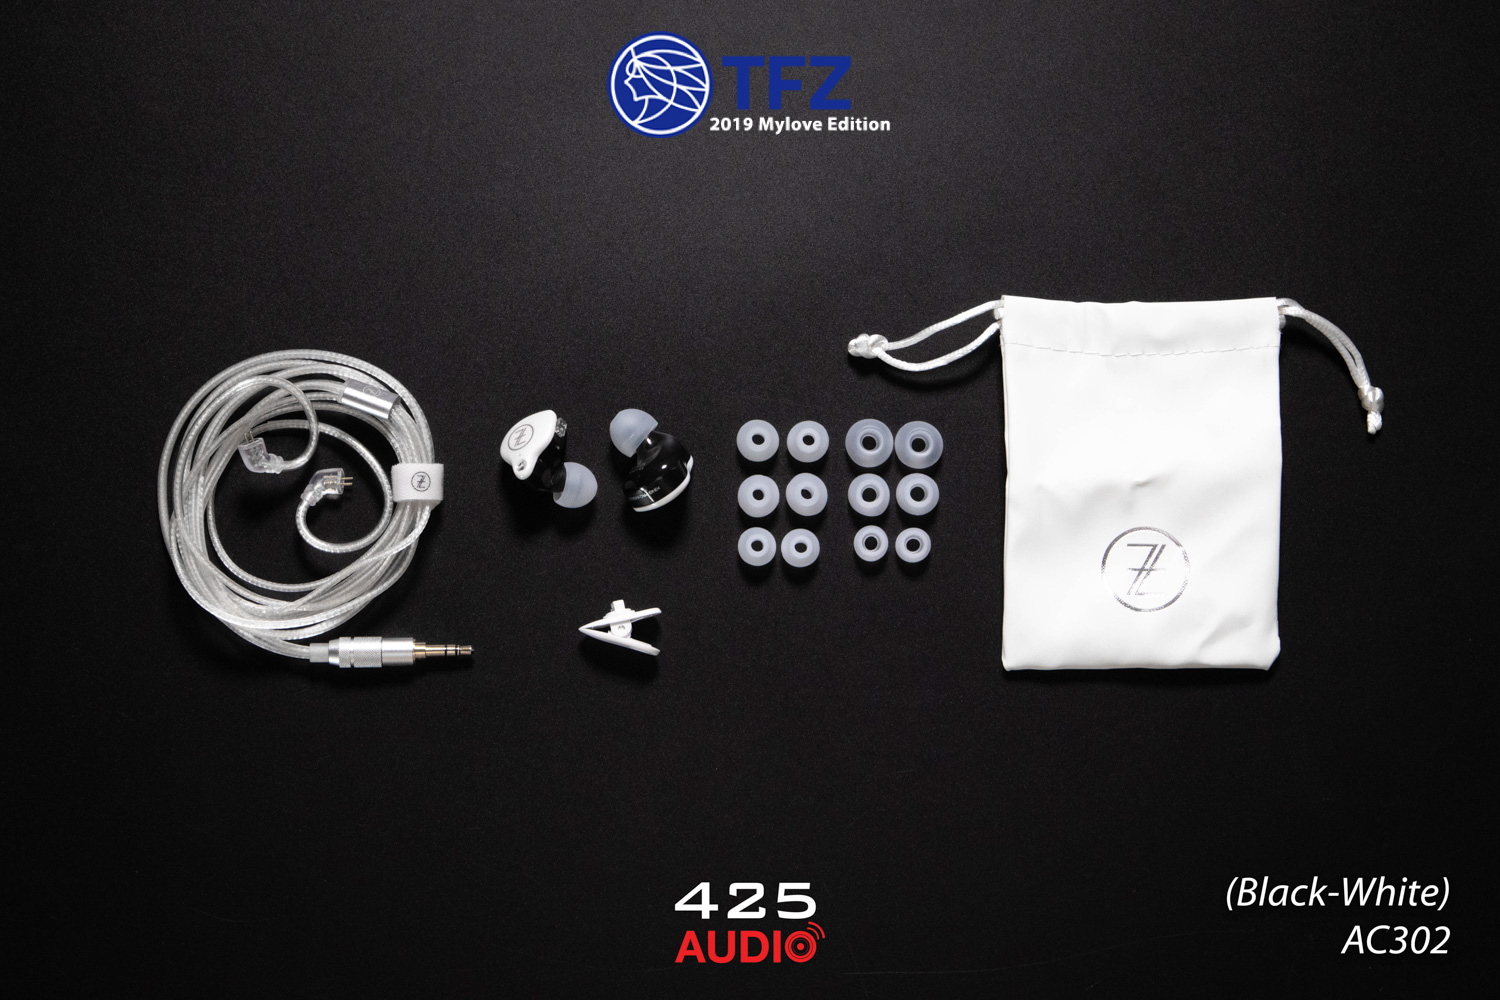 tfz 2019 mylove edition,หูฟัง,in-ear monitor,3.5 มม,เบสหนัก,V-shape,ขั้ว 2 pin,สายทองแดงชุบเงิน,ถอดสายได้